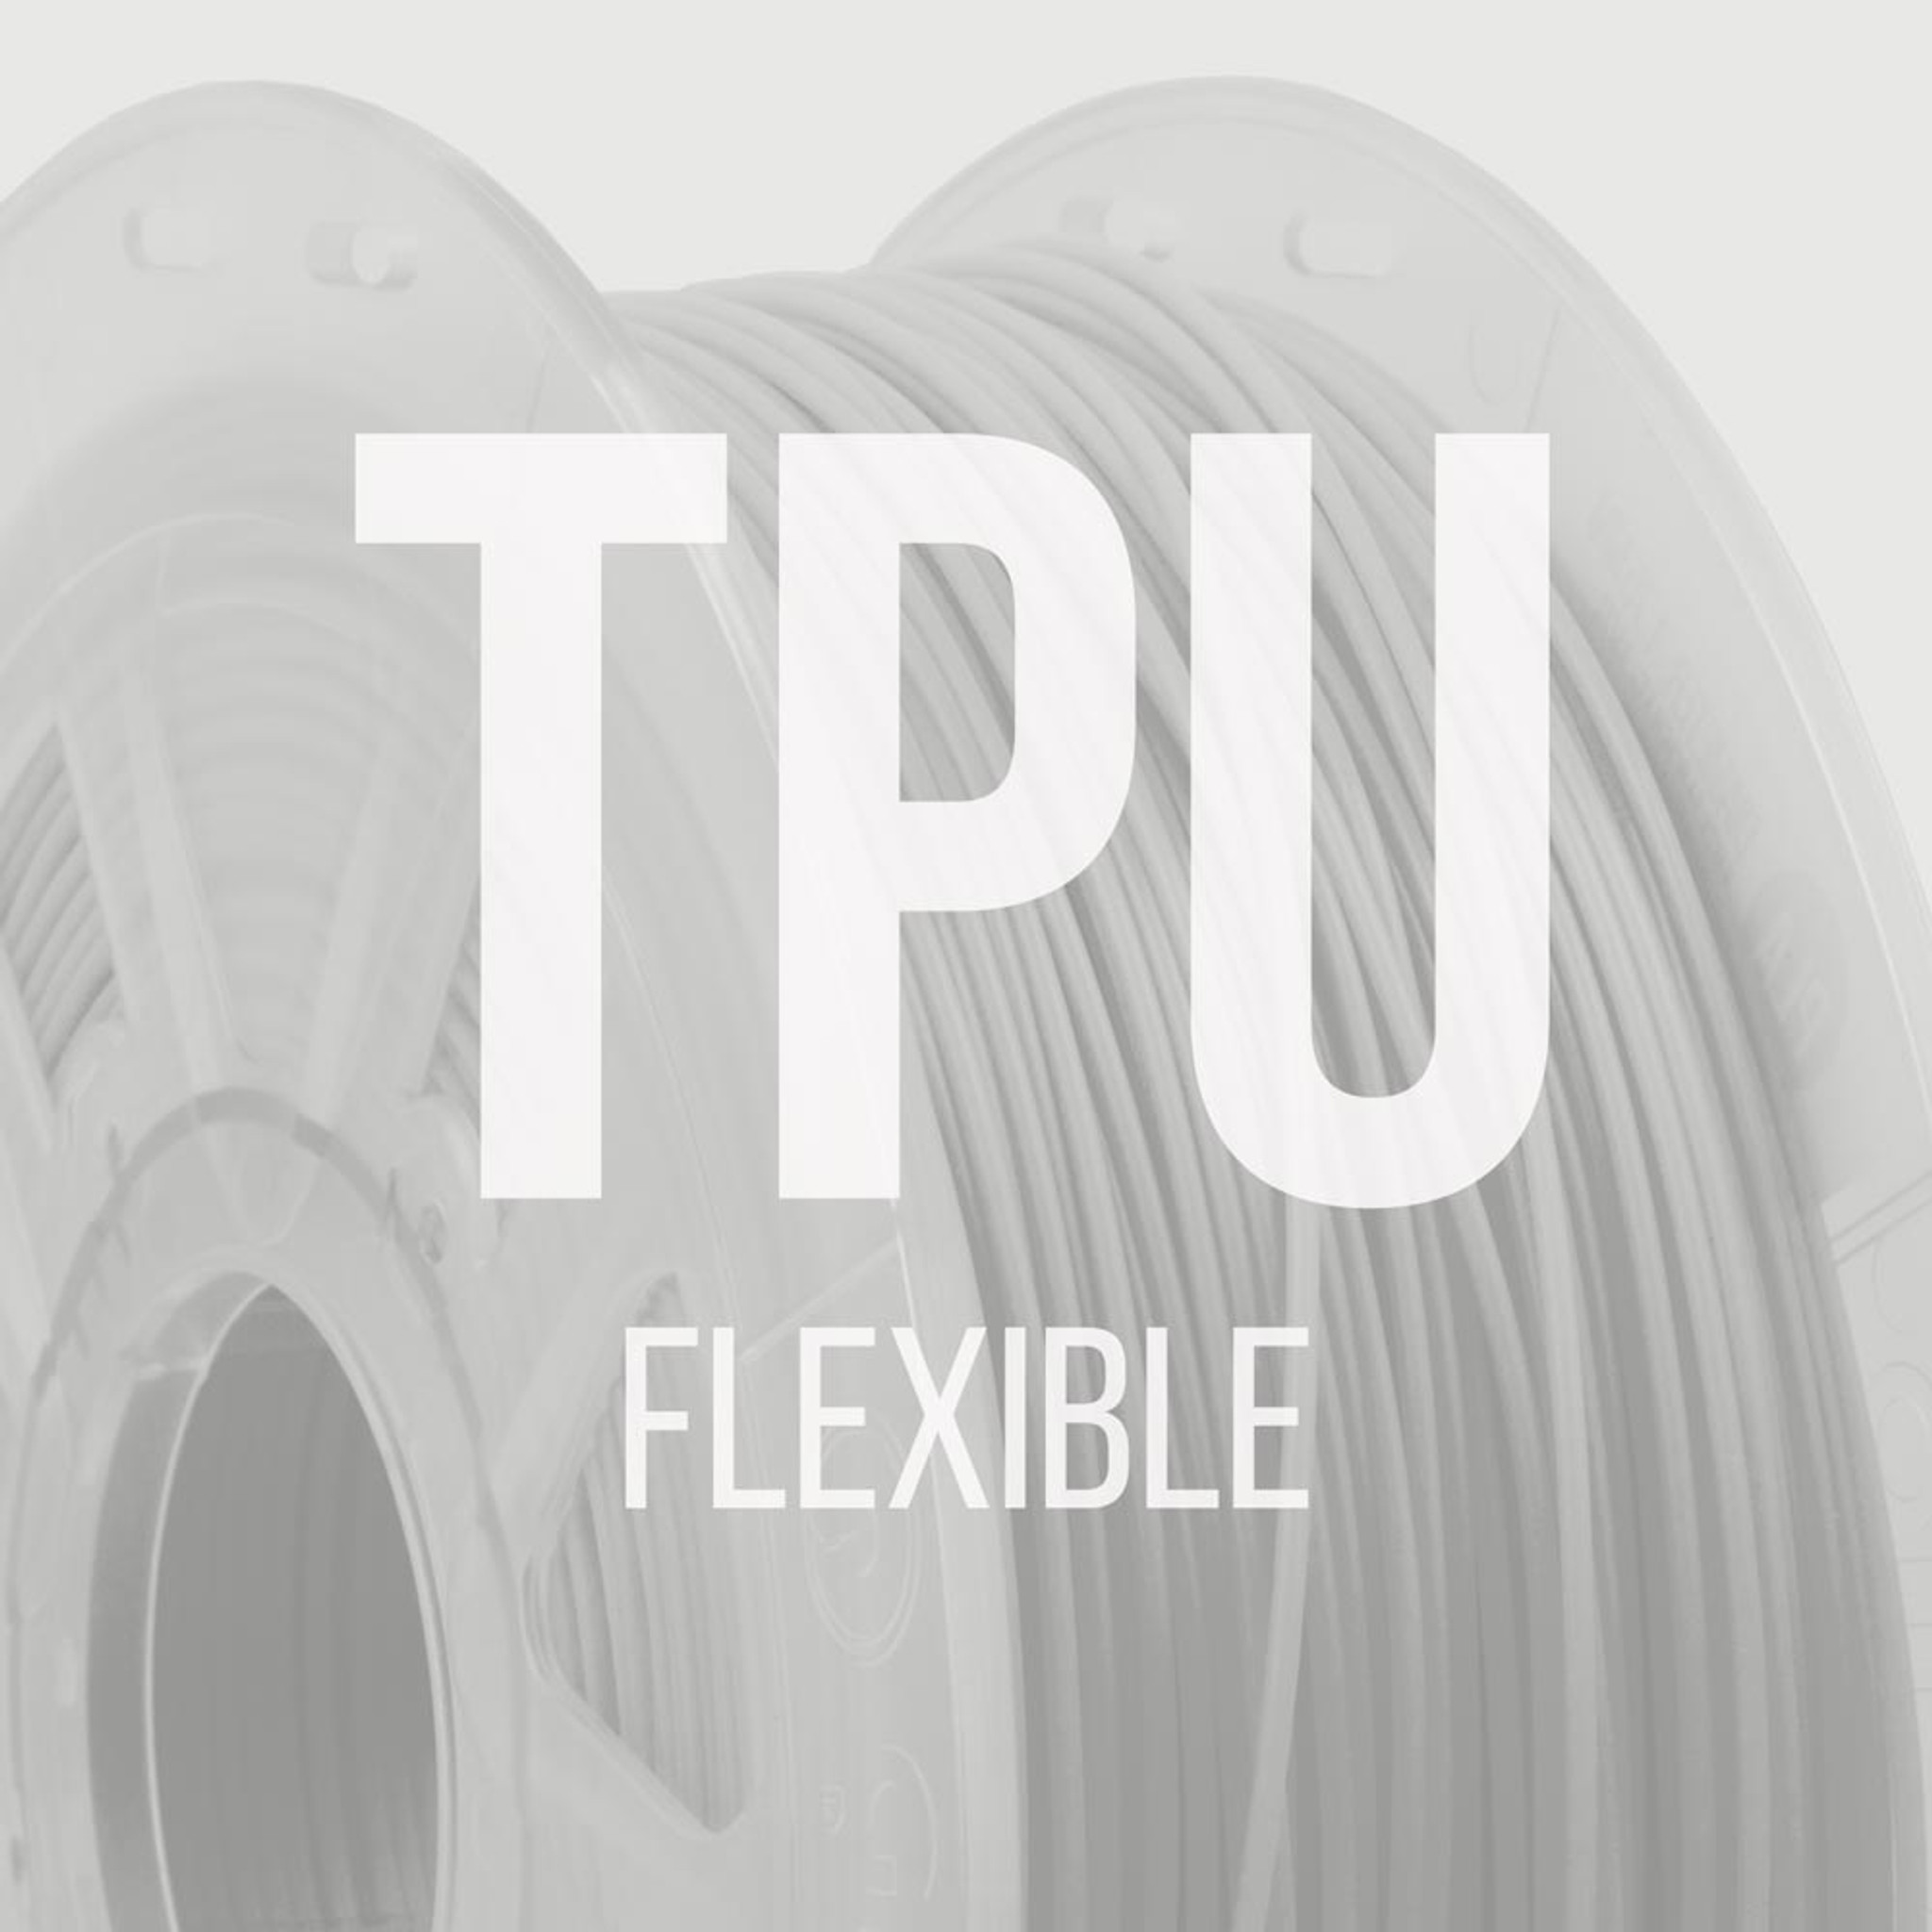 GEEETECH TPU Filament 1.75mm 1kg Gray Soft & Flexible Filament for 3D  Printer US